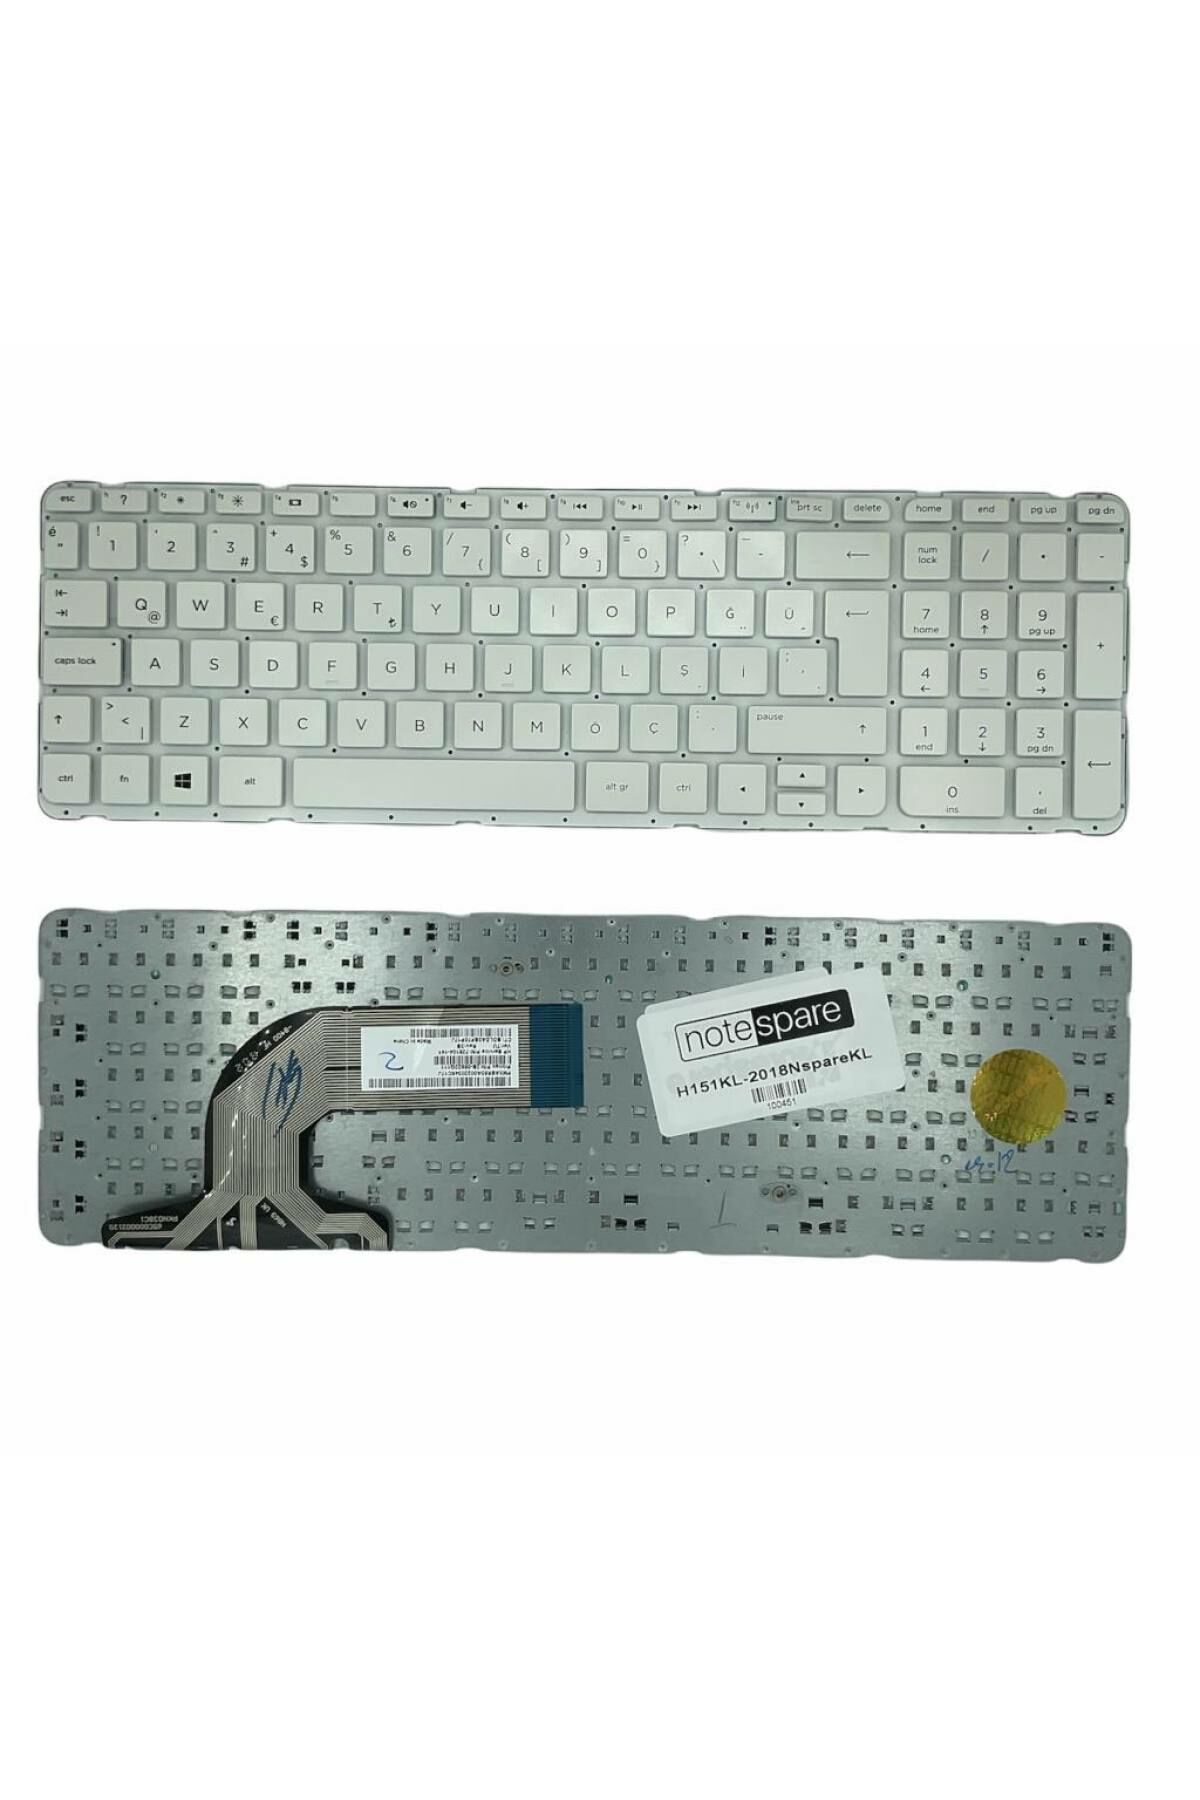 Hp ile Uyumlu 250 G2 (F0Y78EA), 250 G2 (F7X70Es), 250 G2 (F7Z11Es) Notebook Klavye Beyaz TR